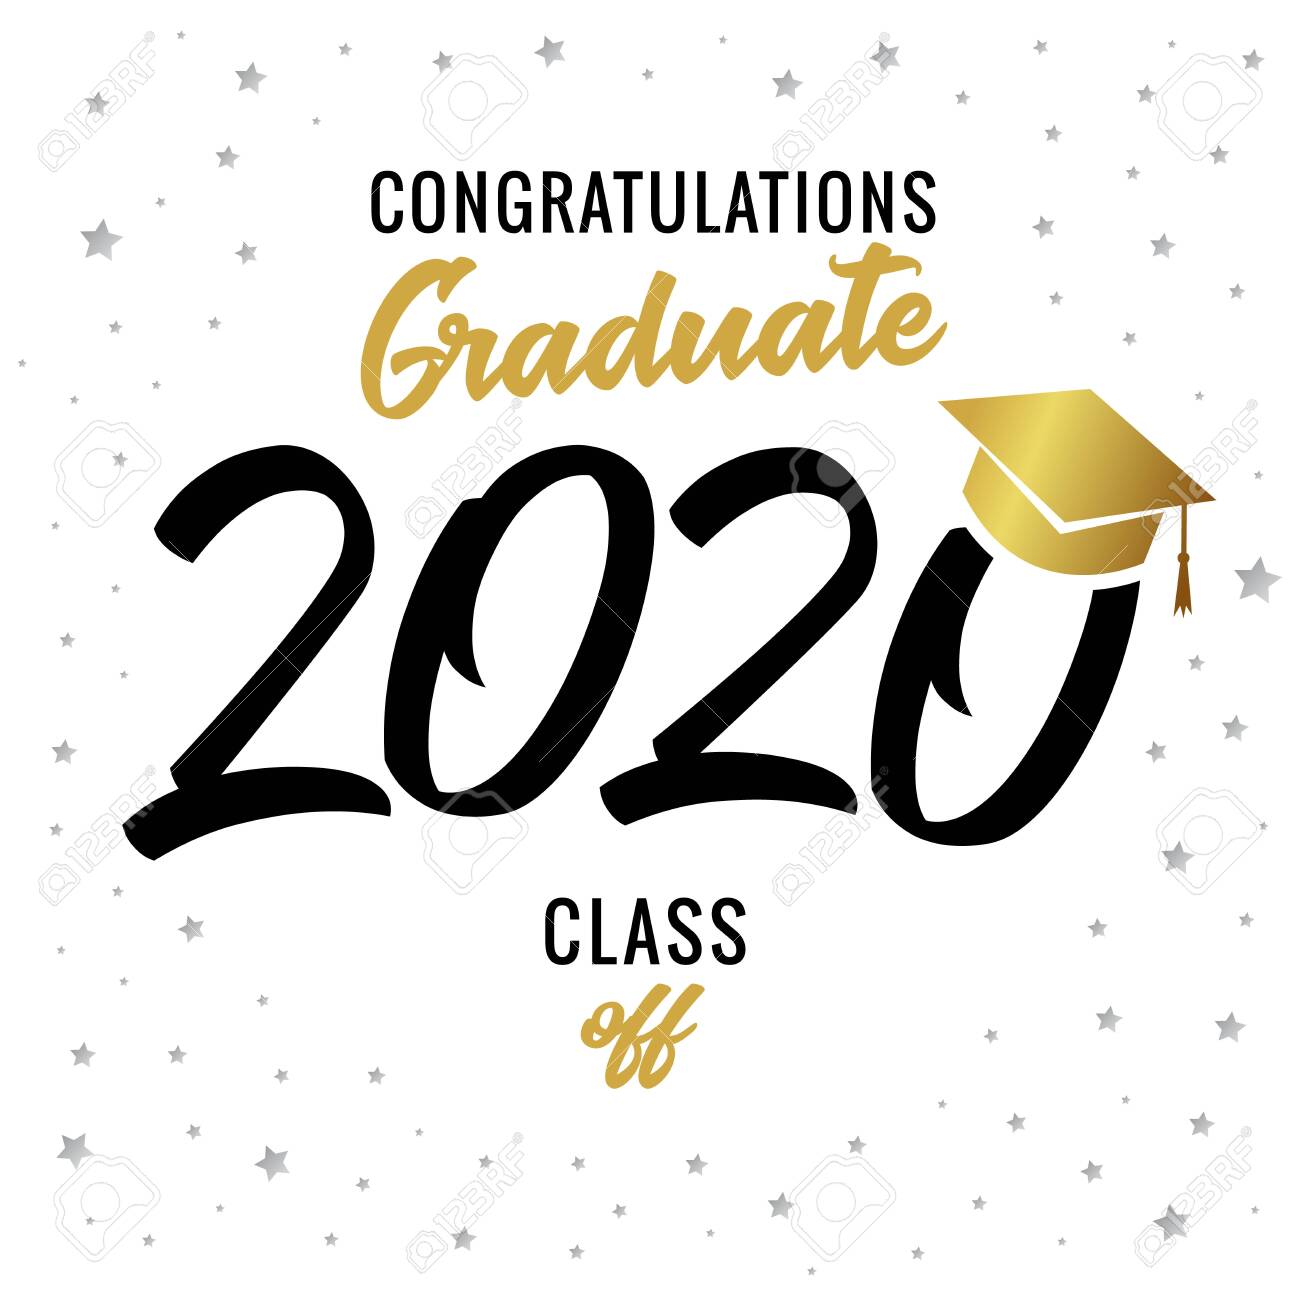 130638478-graduating-class-of-2020-vector-illustration-class-of-20-20-with-academic-cap-calligraphy-design-gra.jpg